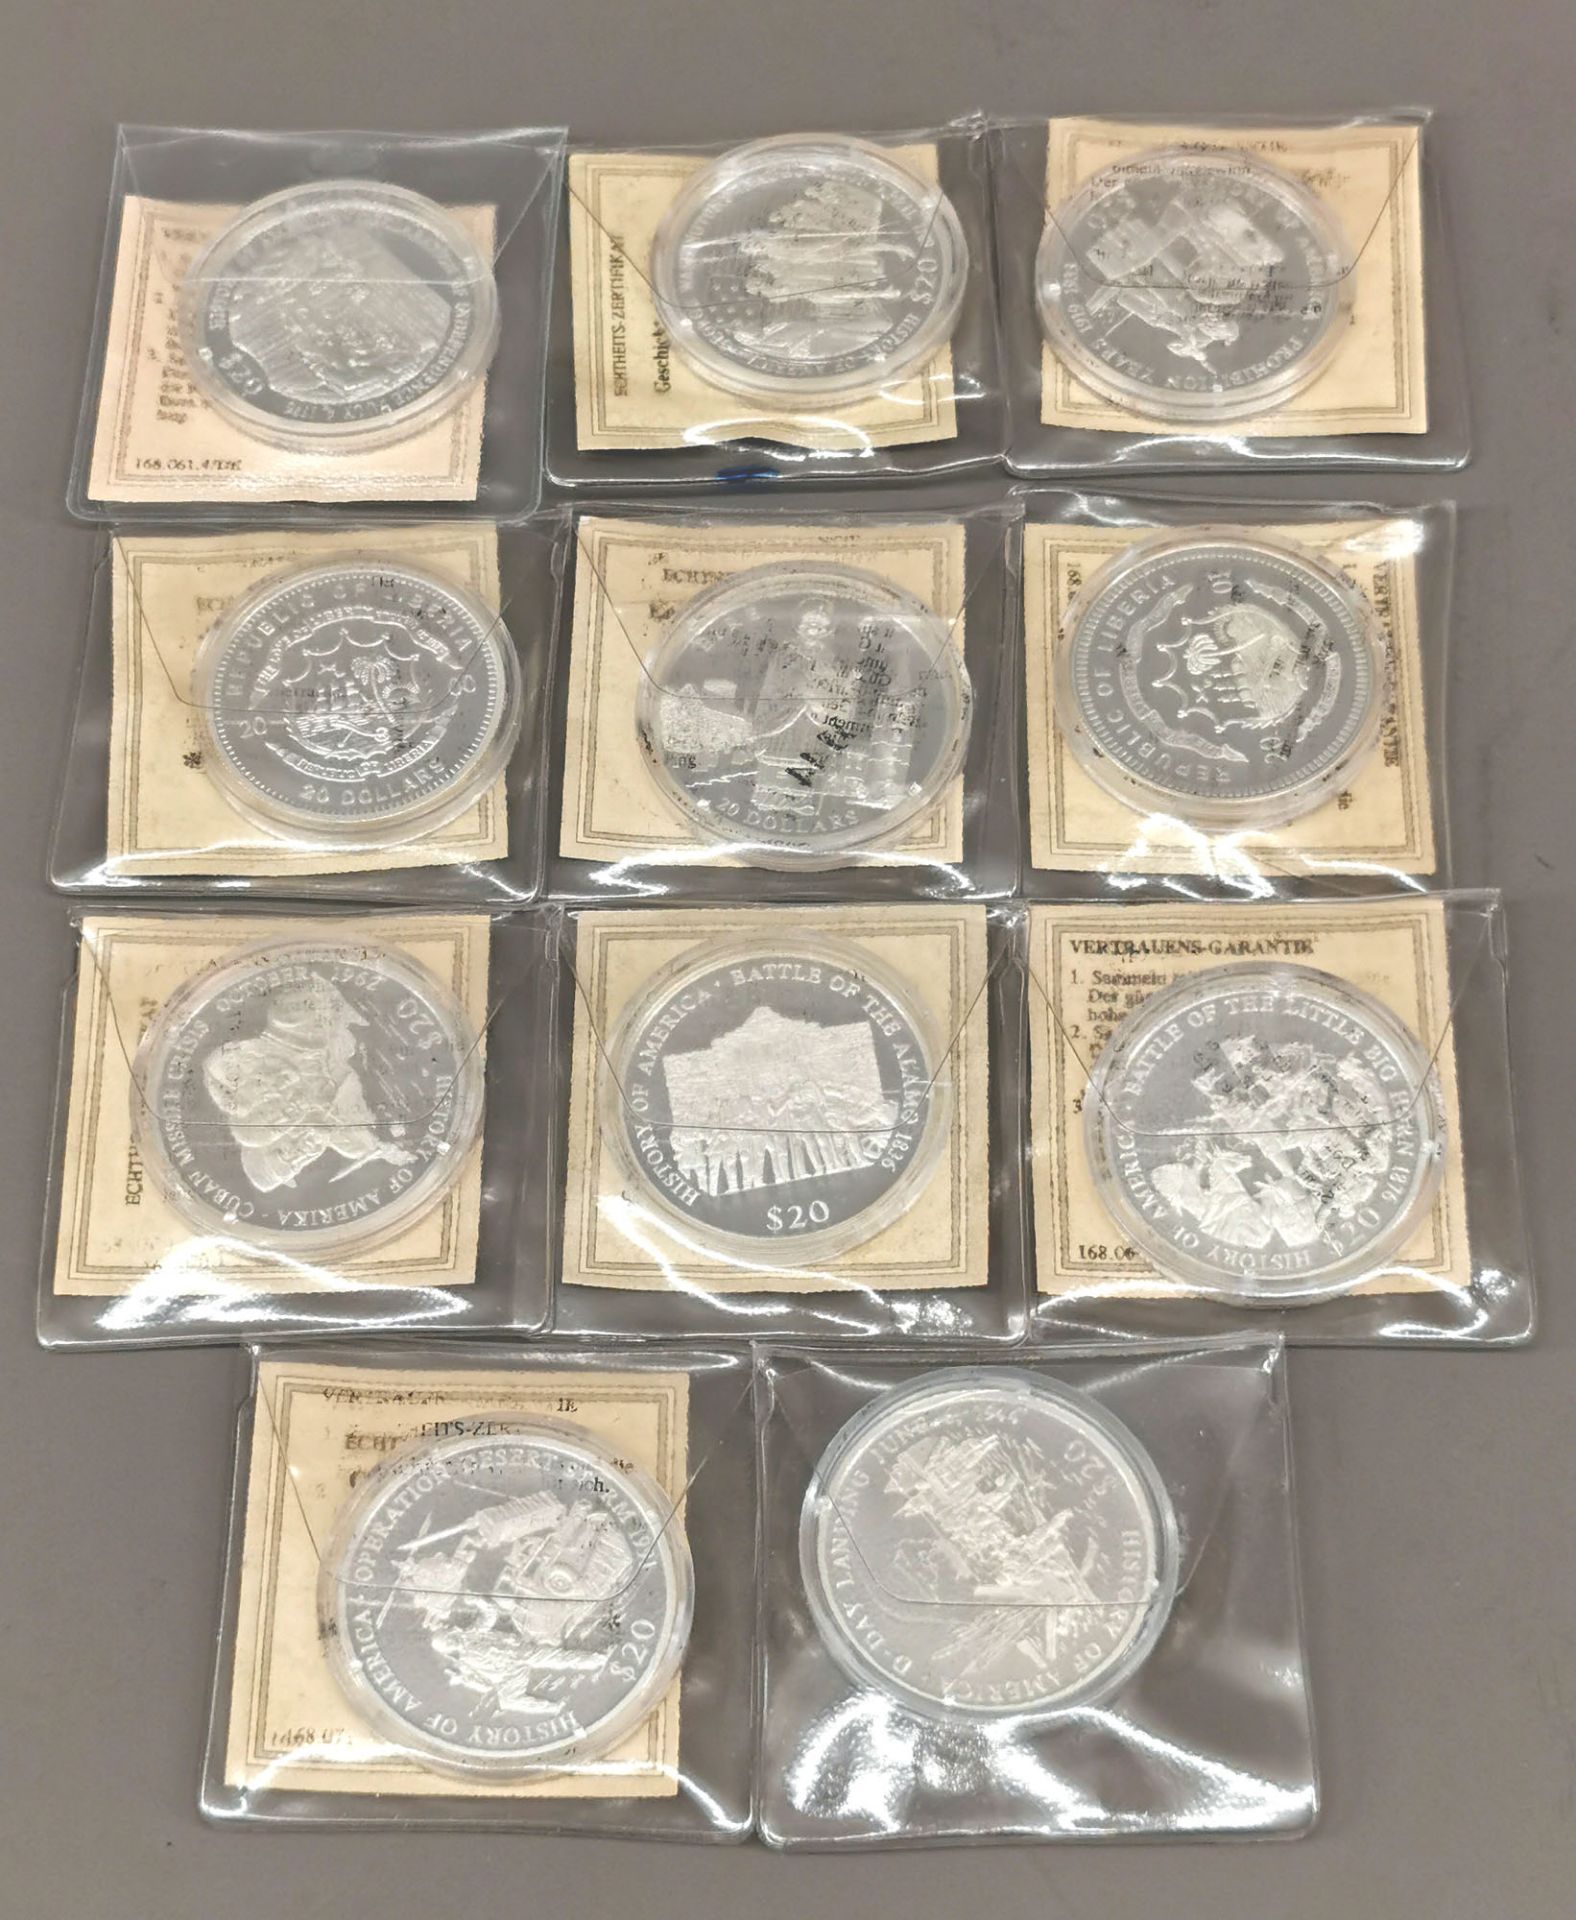 Konvolut 11 x 20 Dollars Silbermünzen - Image 2 of 4